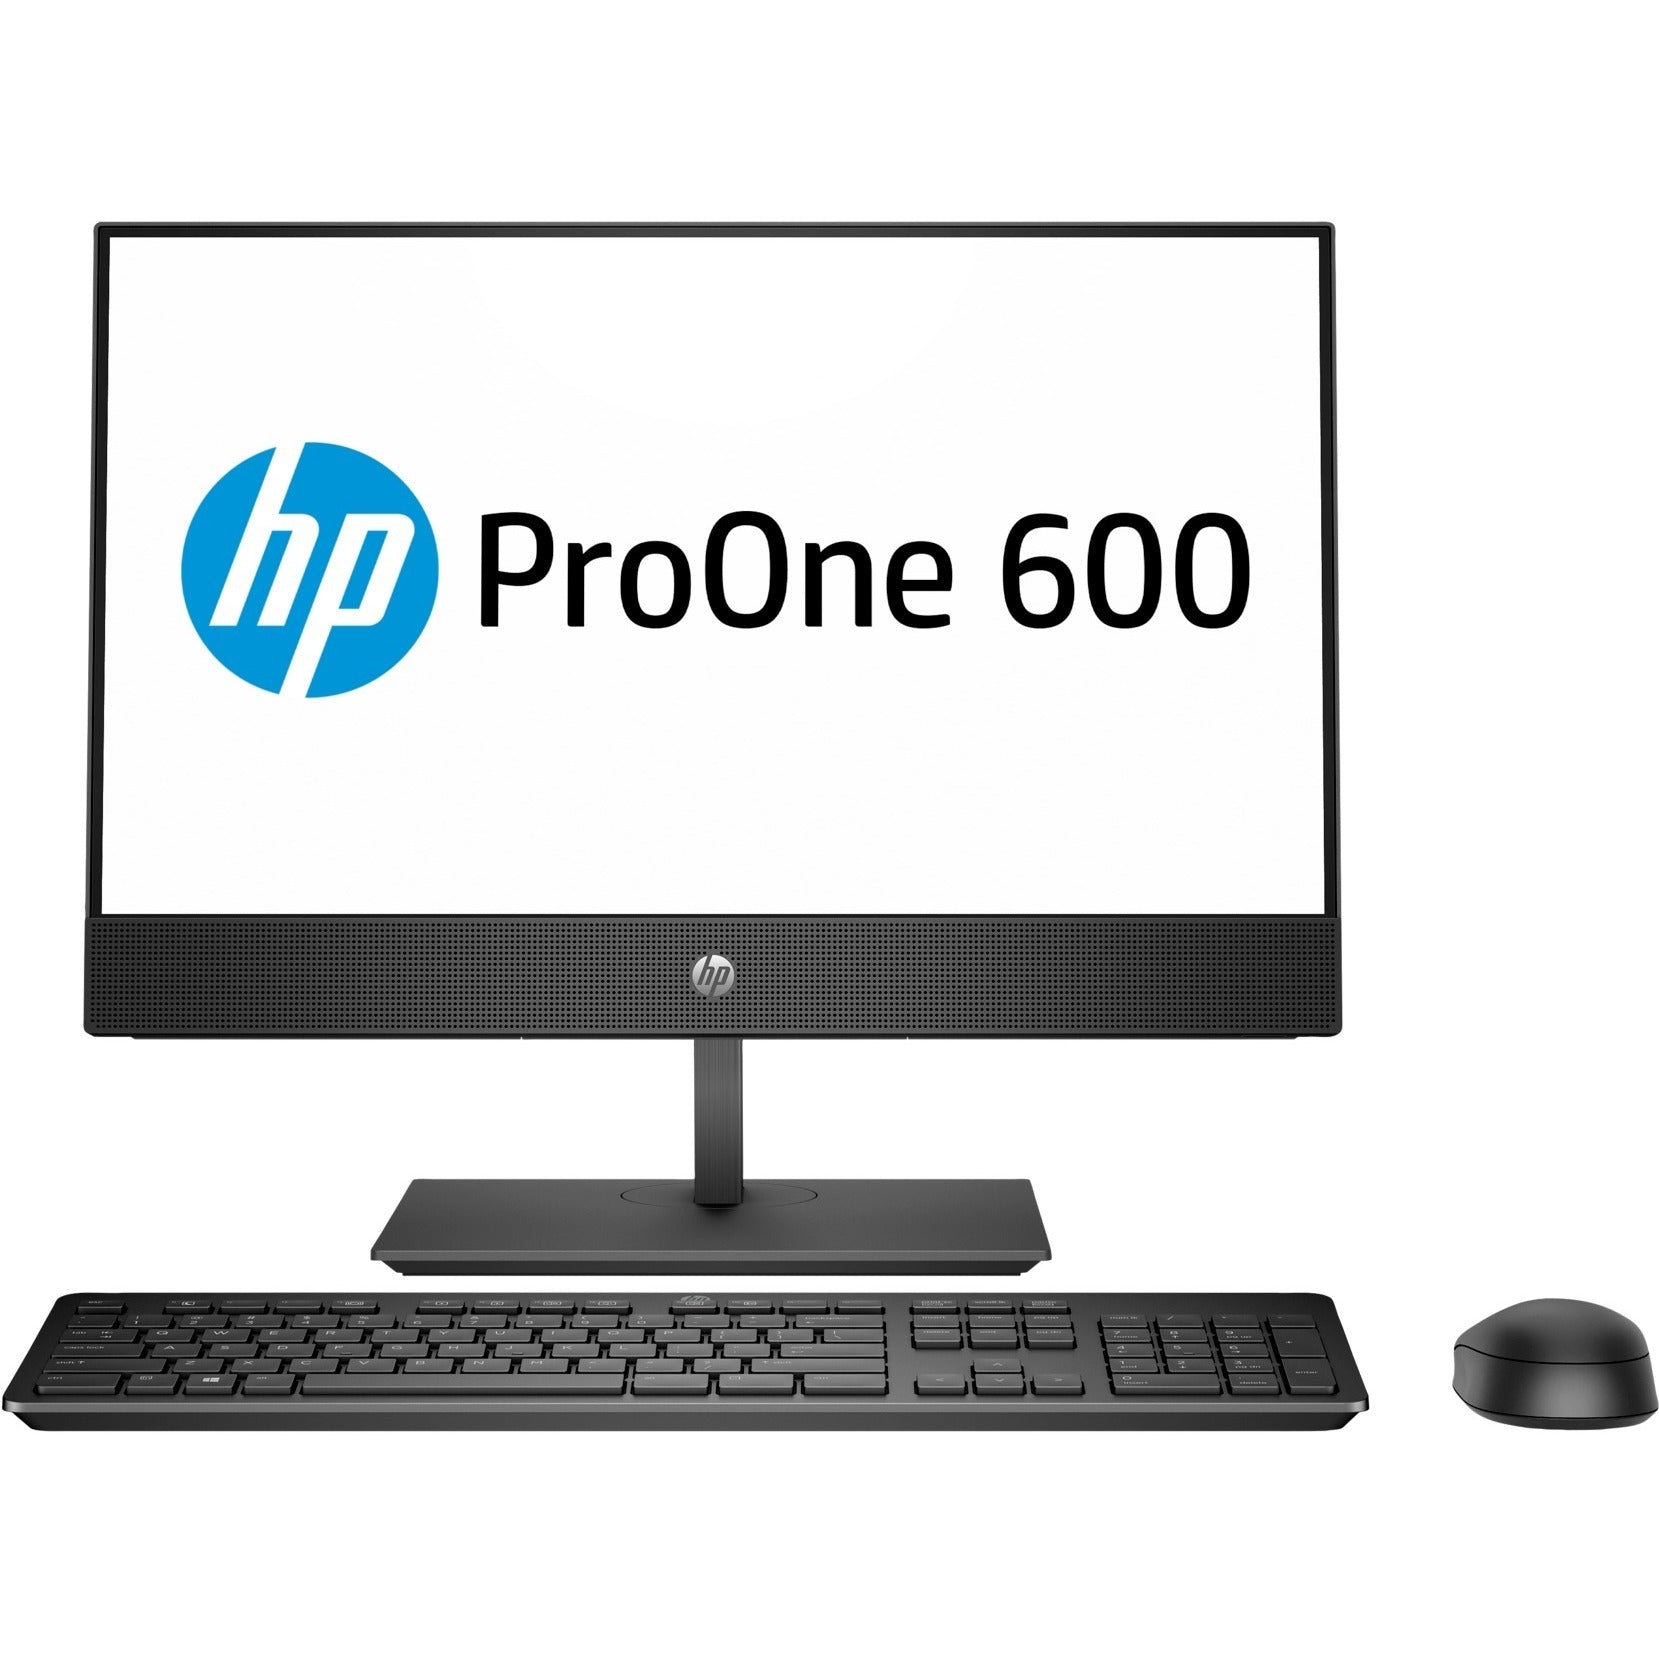 HP Business Desktop ProOne 600 G4 All-in-One Computer - Intel Core i5 8th  Gen i5-8500 3 GHz - 8 GB RAM DDR4 SDRAM - 128 GB SSD - 21.5